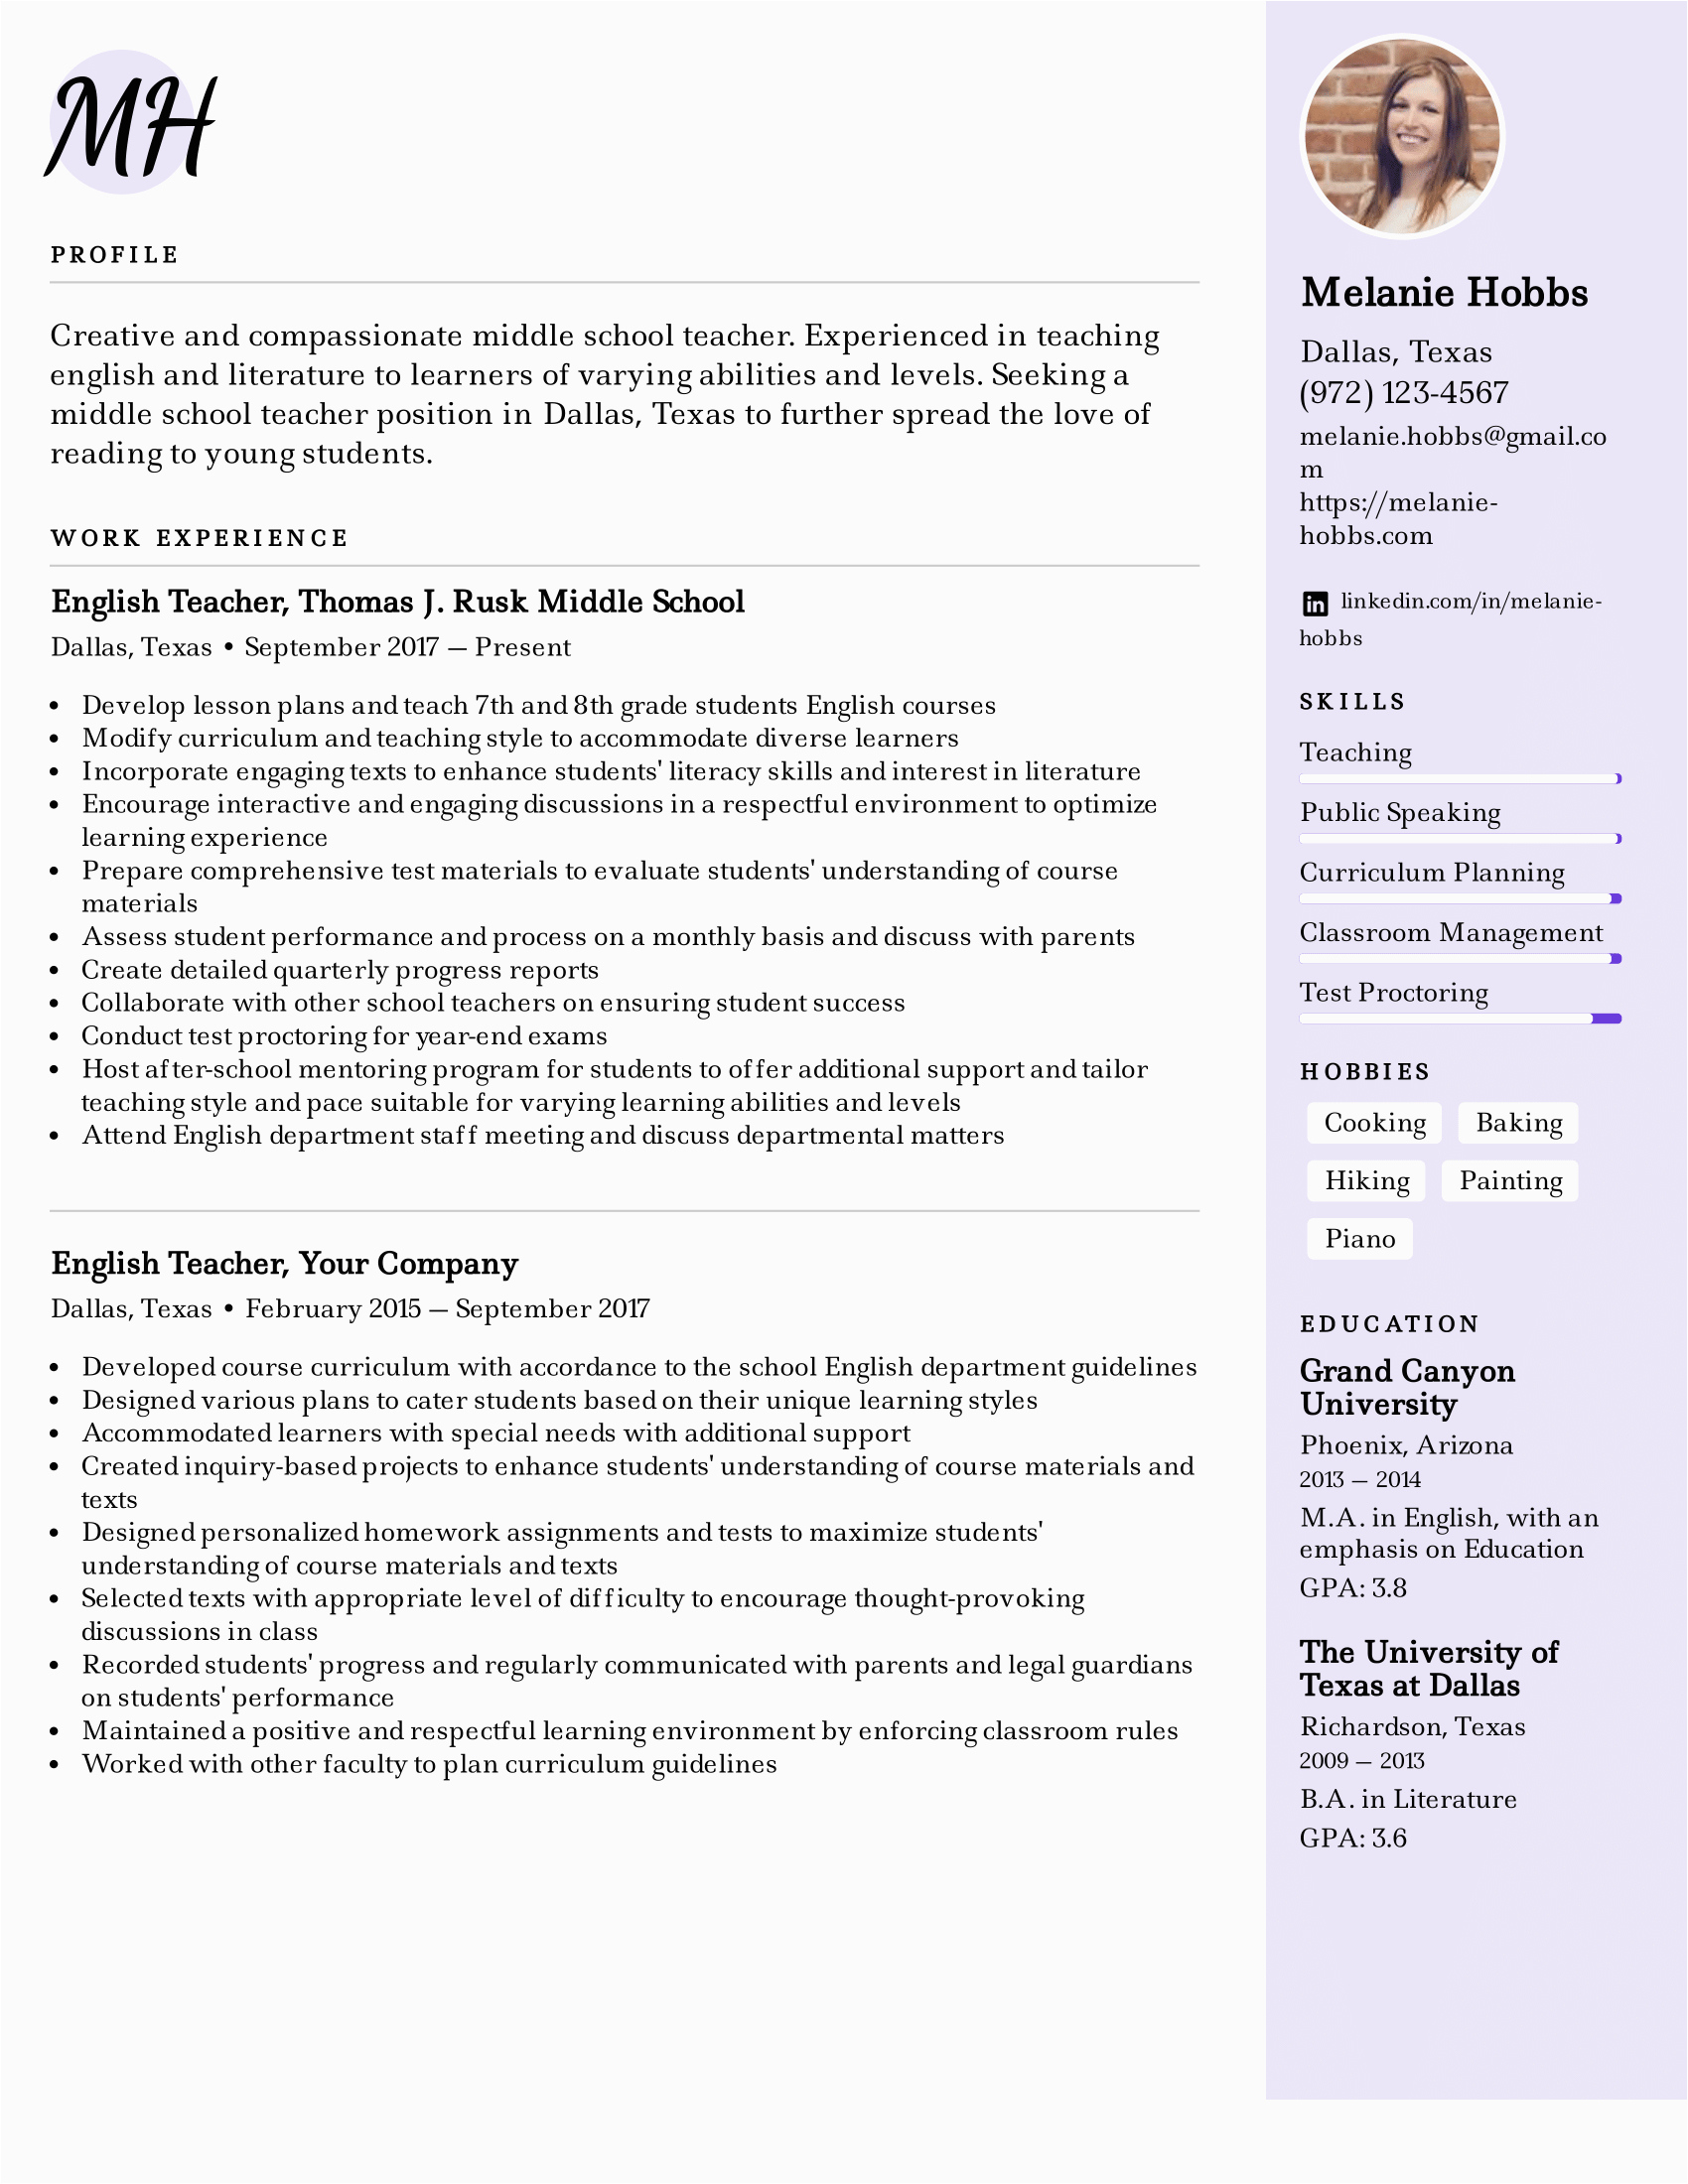 Resume Sample for Middle School Teacher Middle School Teacher Resume Example & Writing Tips for 2021